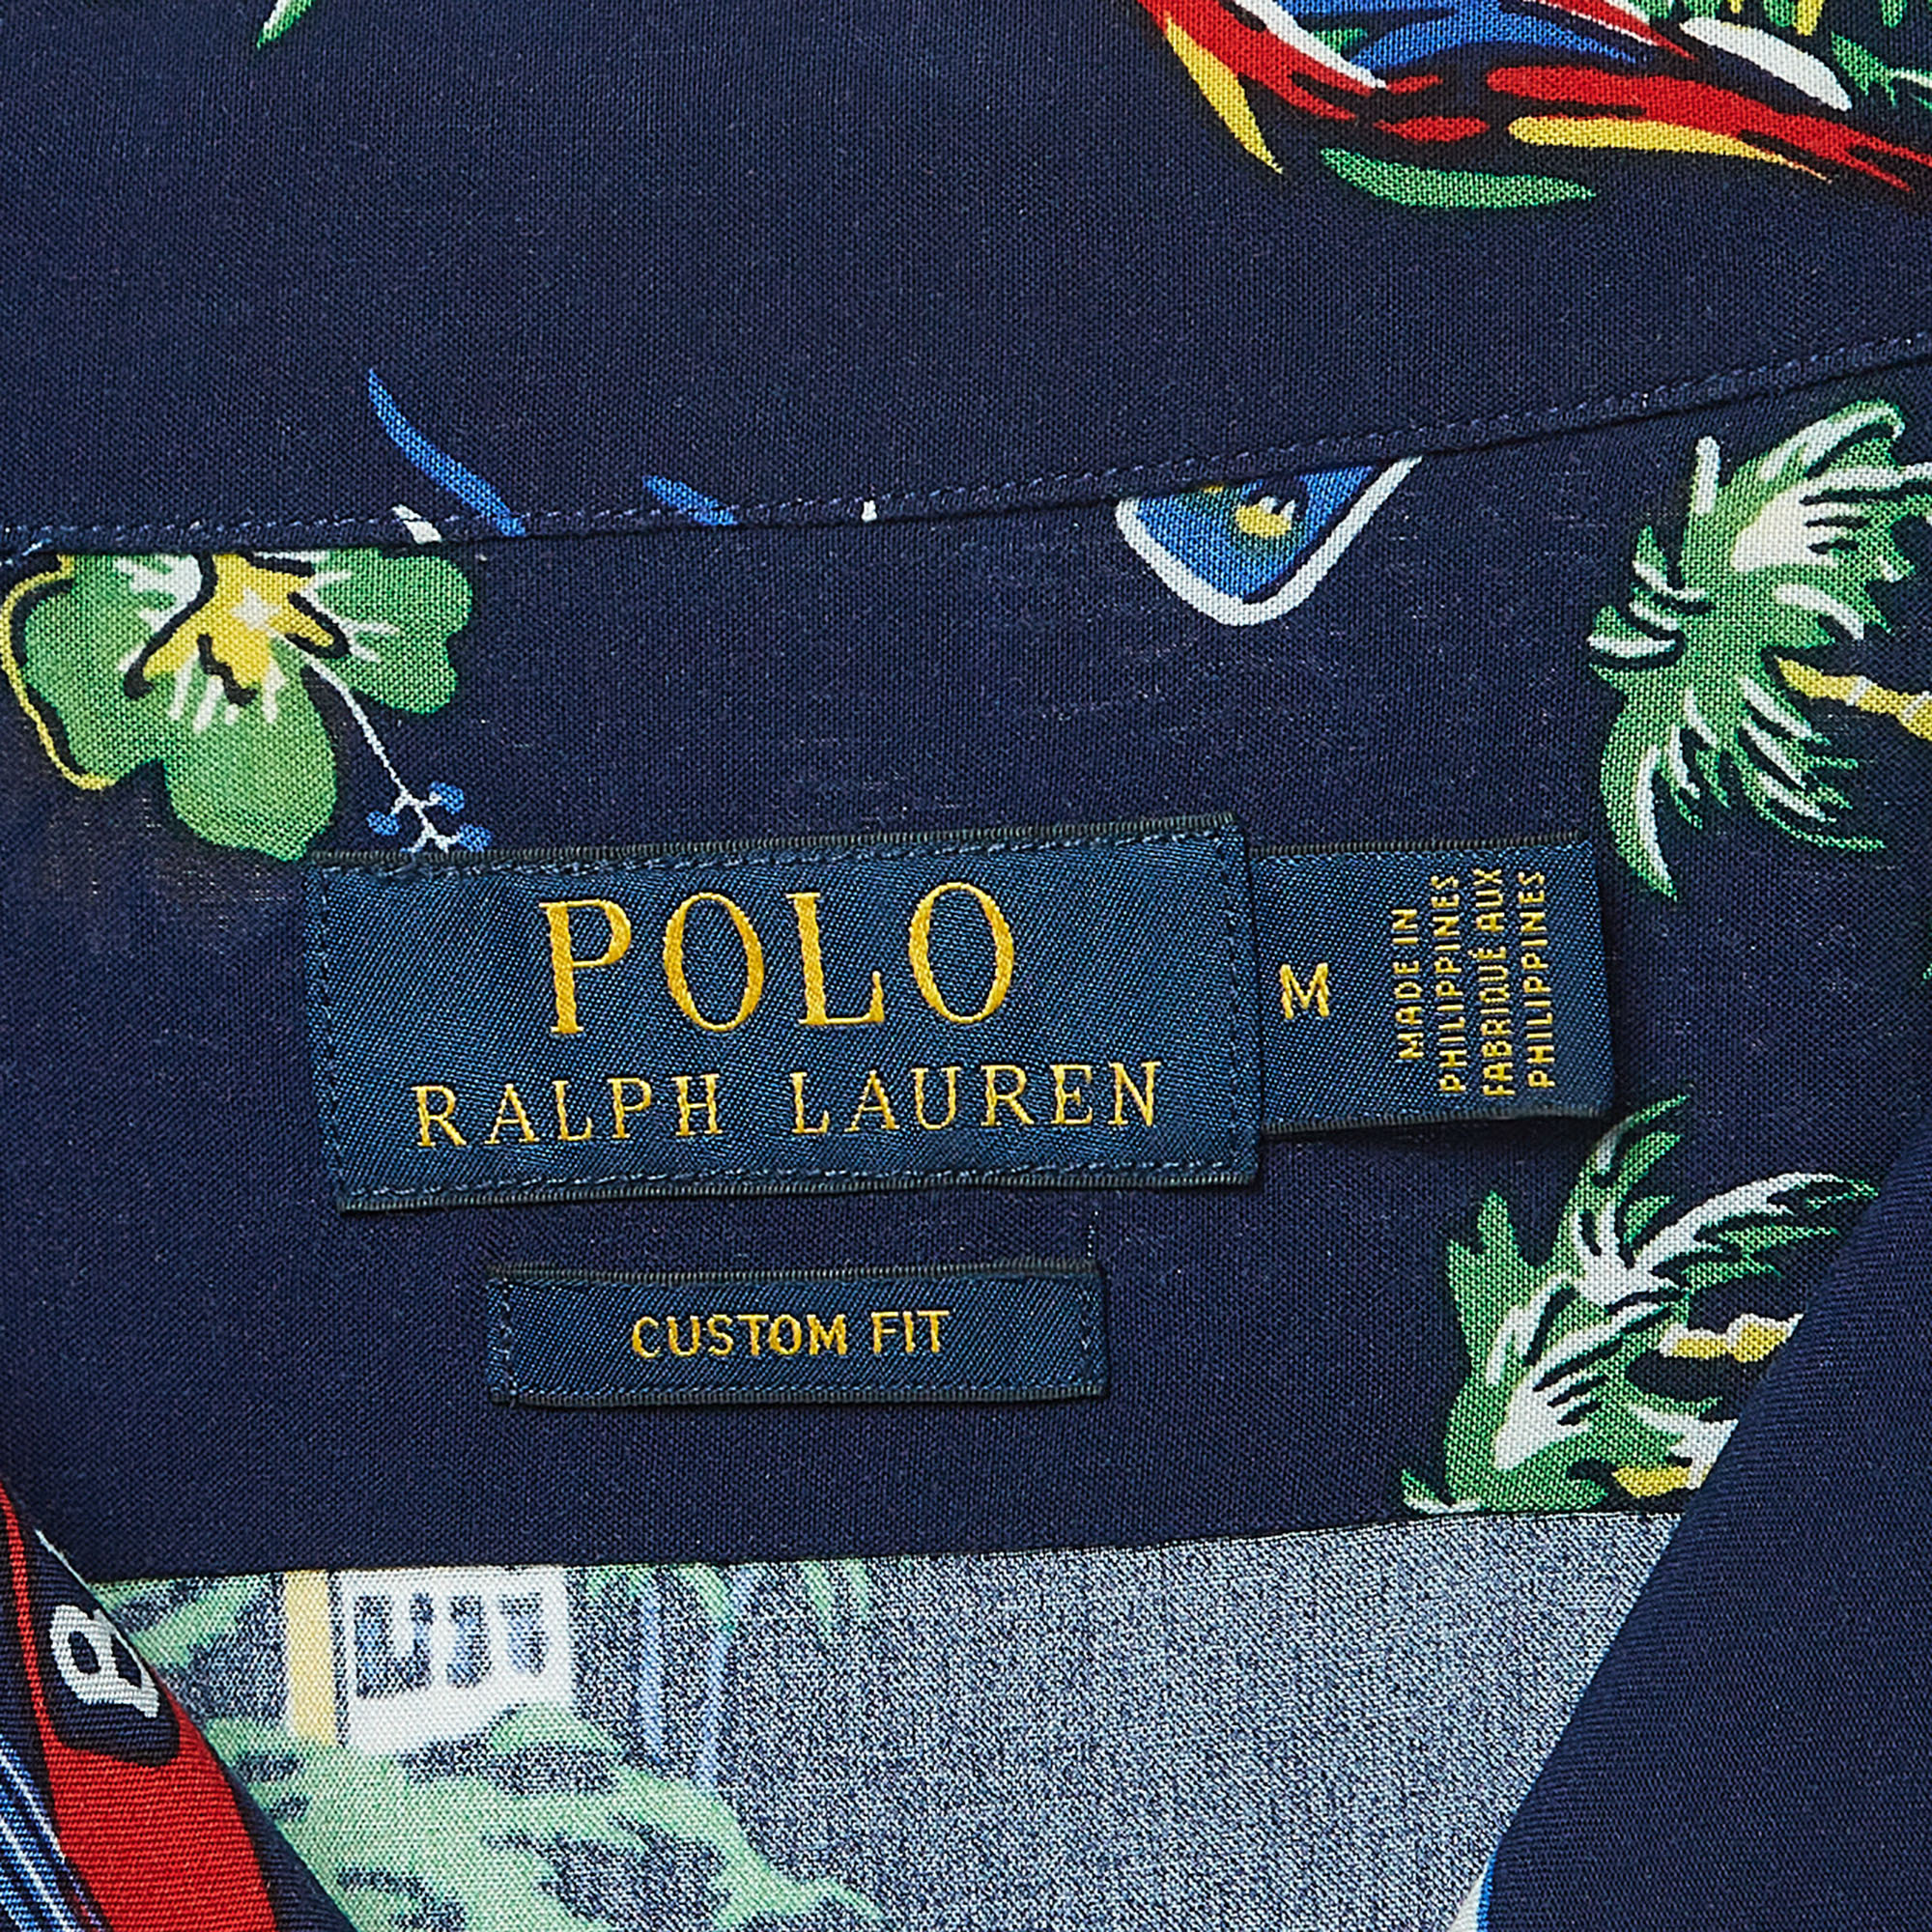 Polo Ralph Lauren Navy Blue Print Crepe Button Front Custom Fit Shirt M